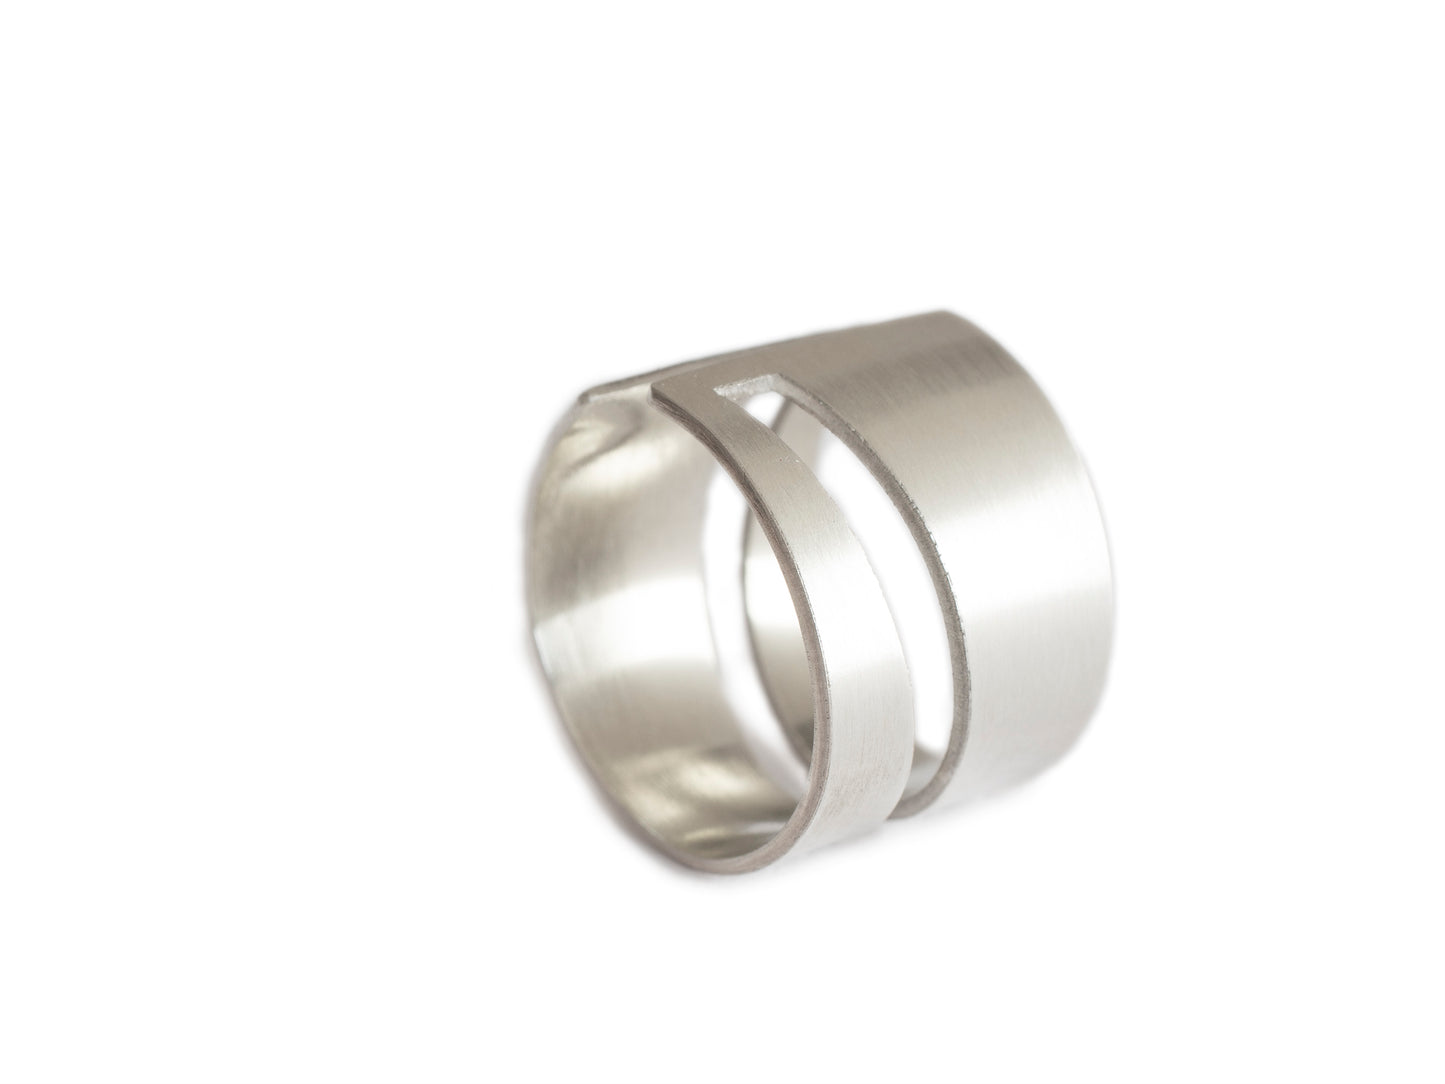 Minimalist geometric silver ring